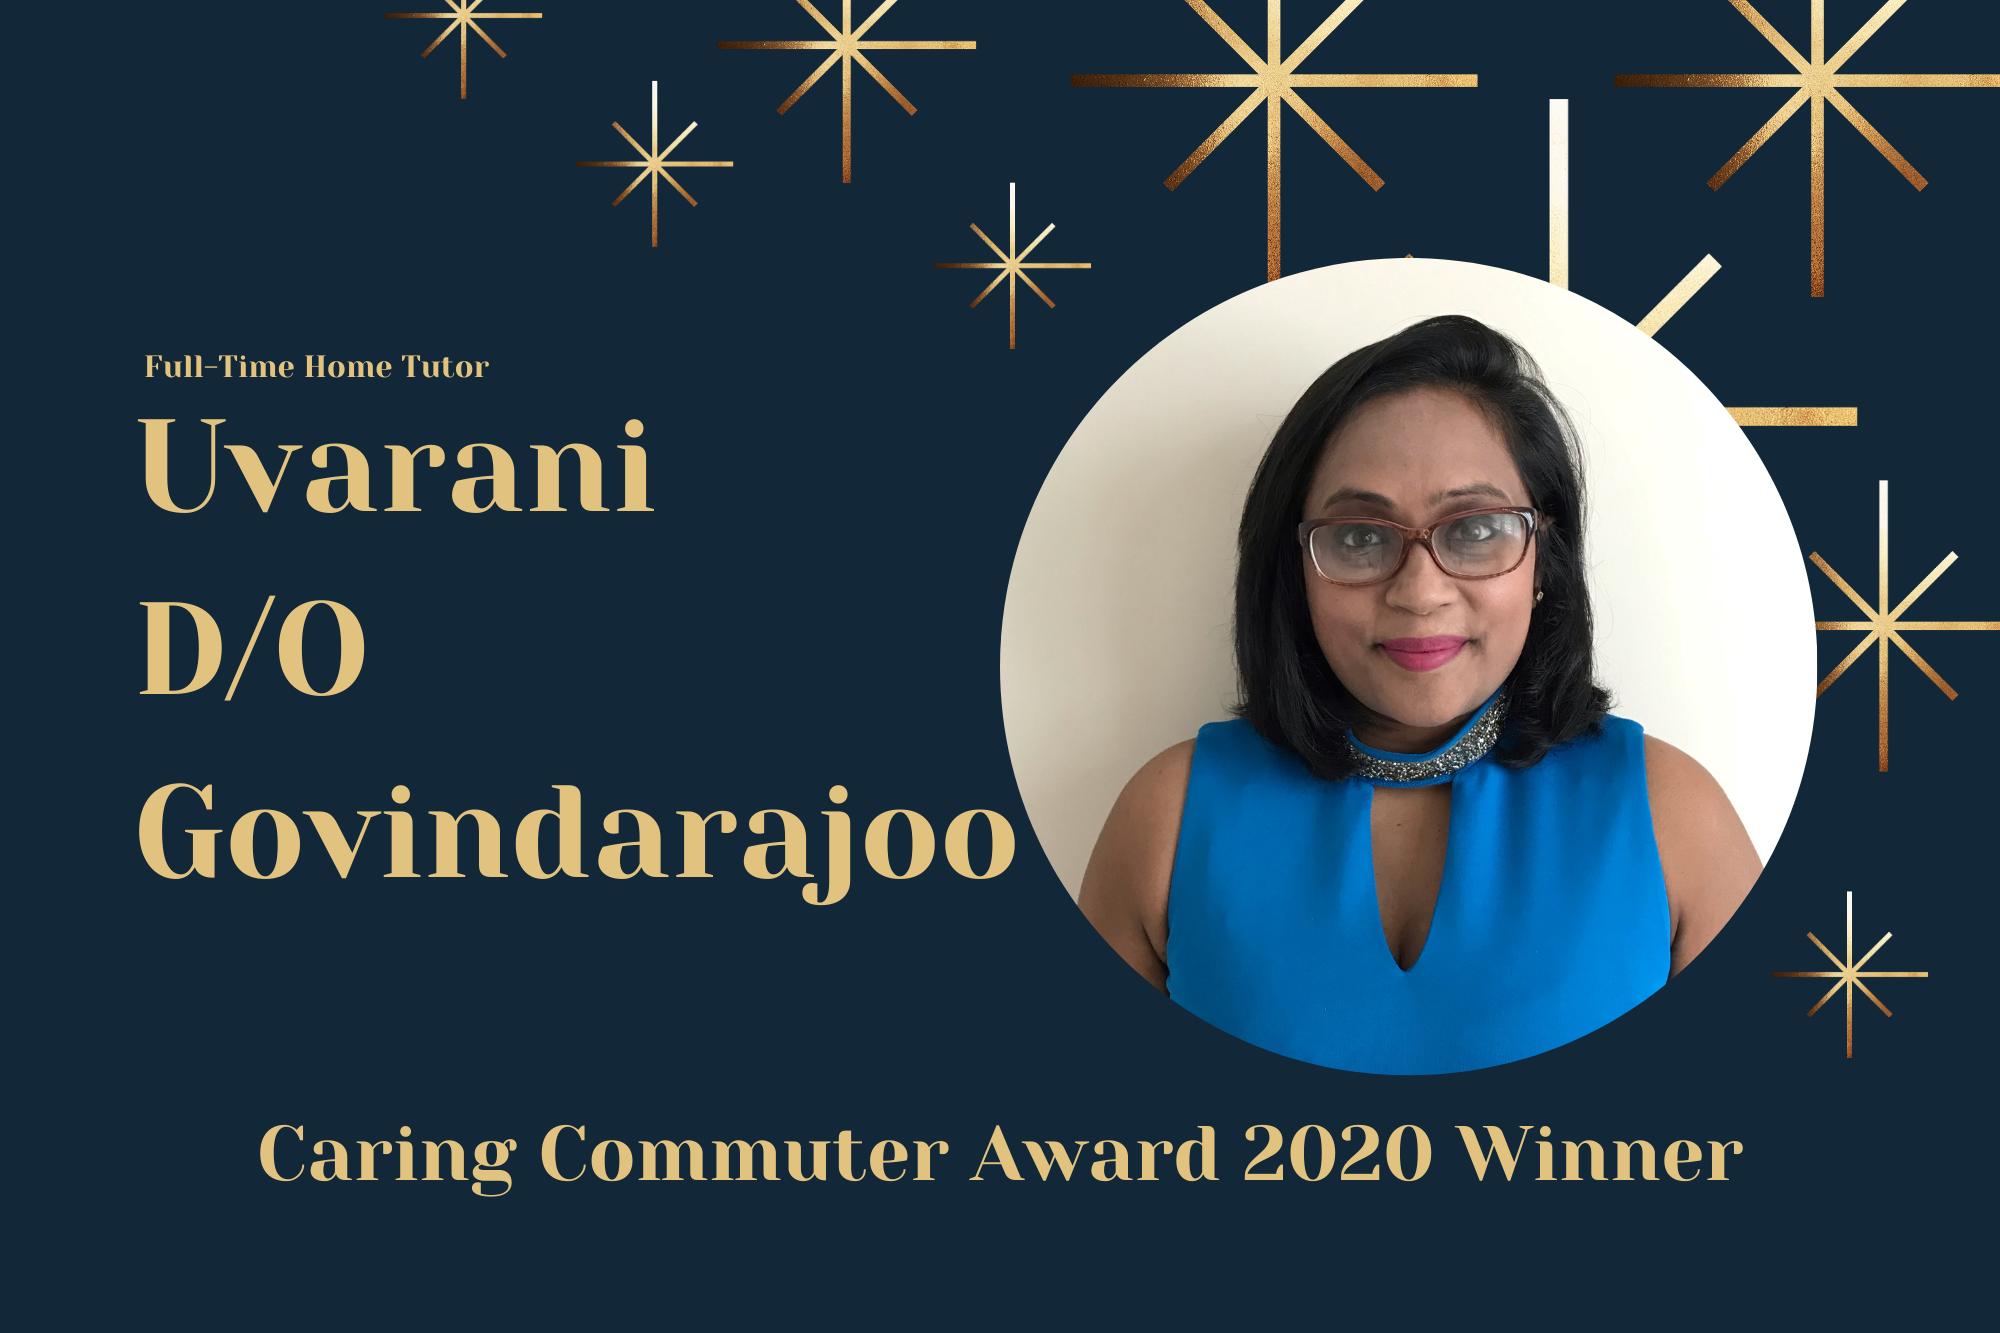 Meet Uvarani, Full-Time Home Tutor and Caring Commuter Award 2020 Winner